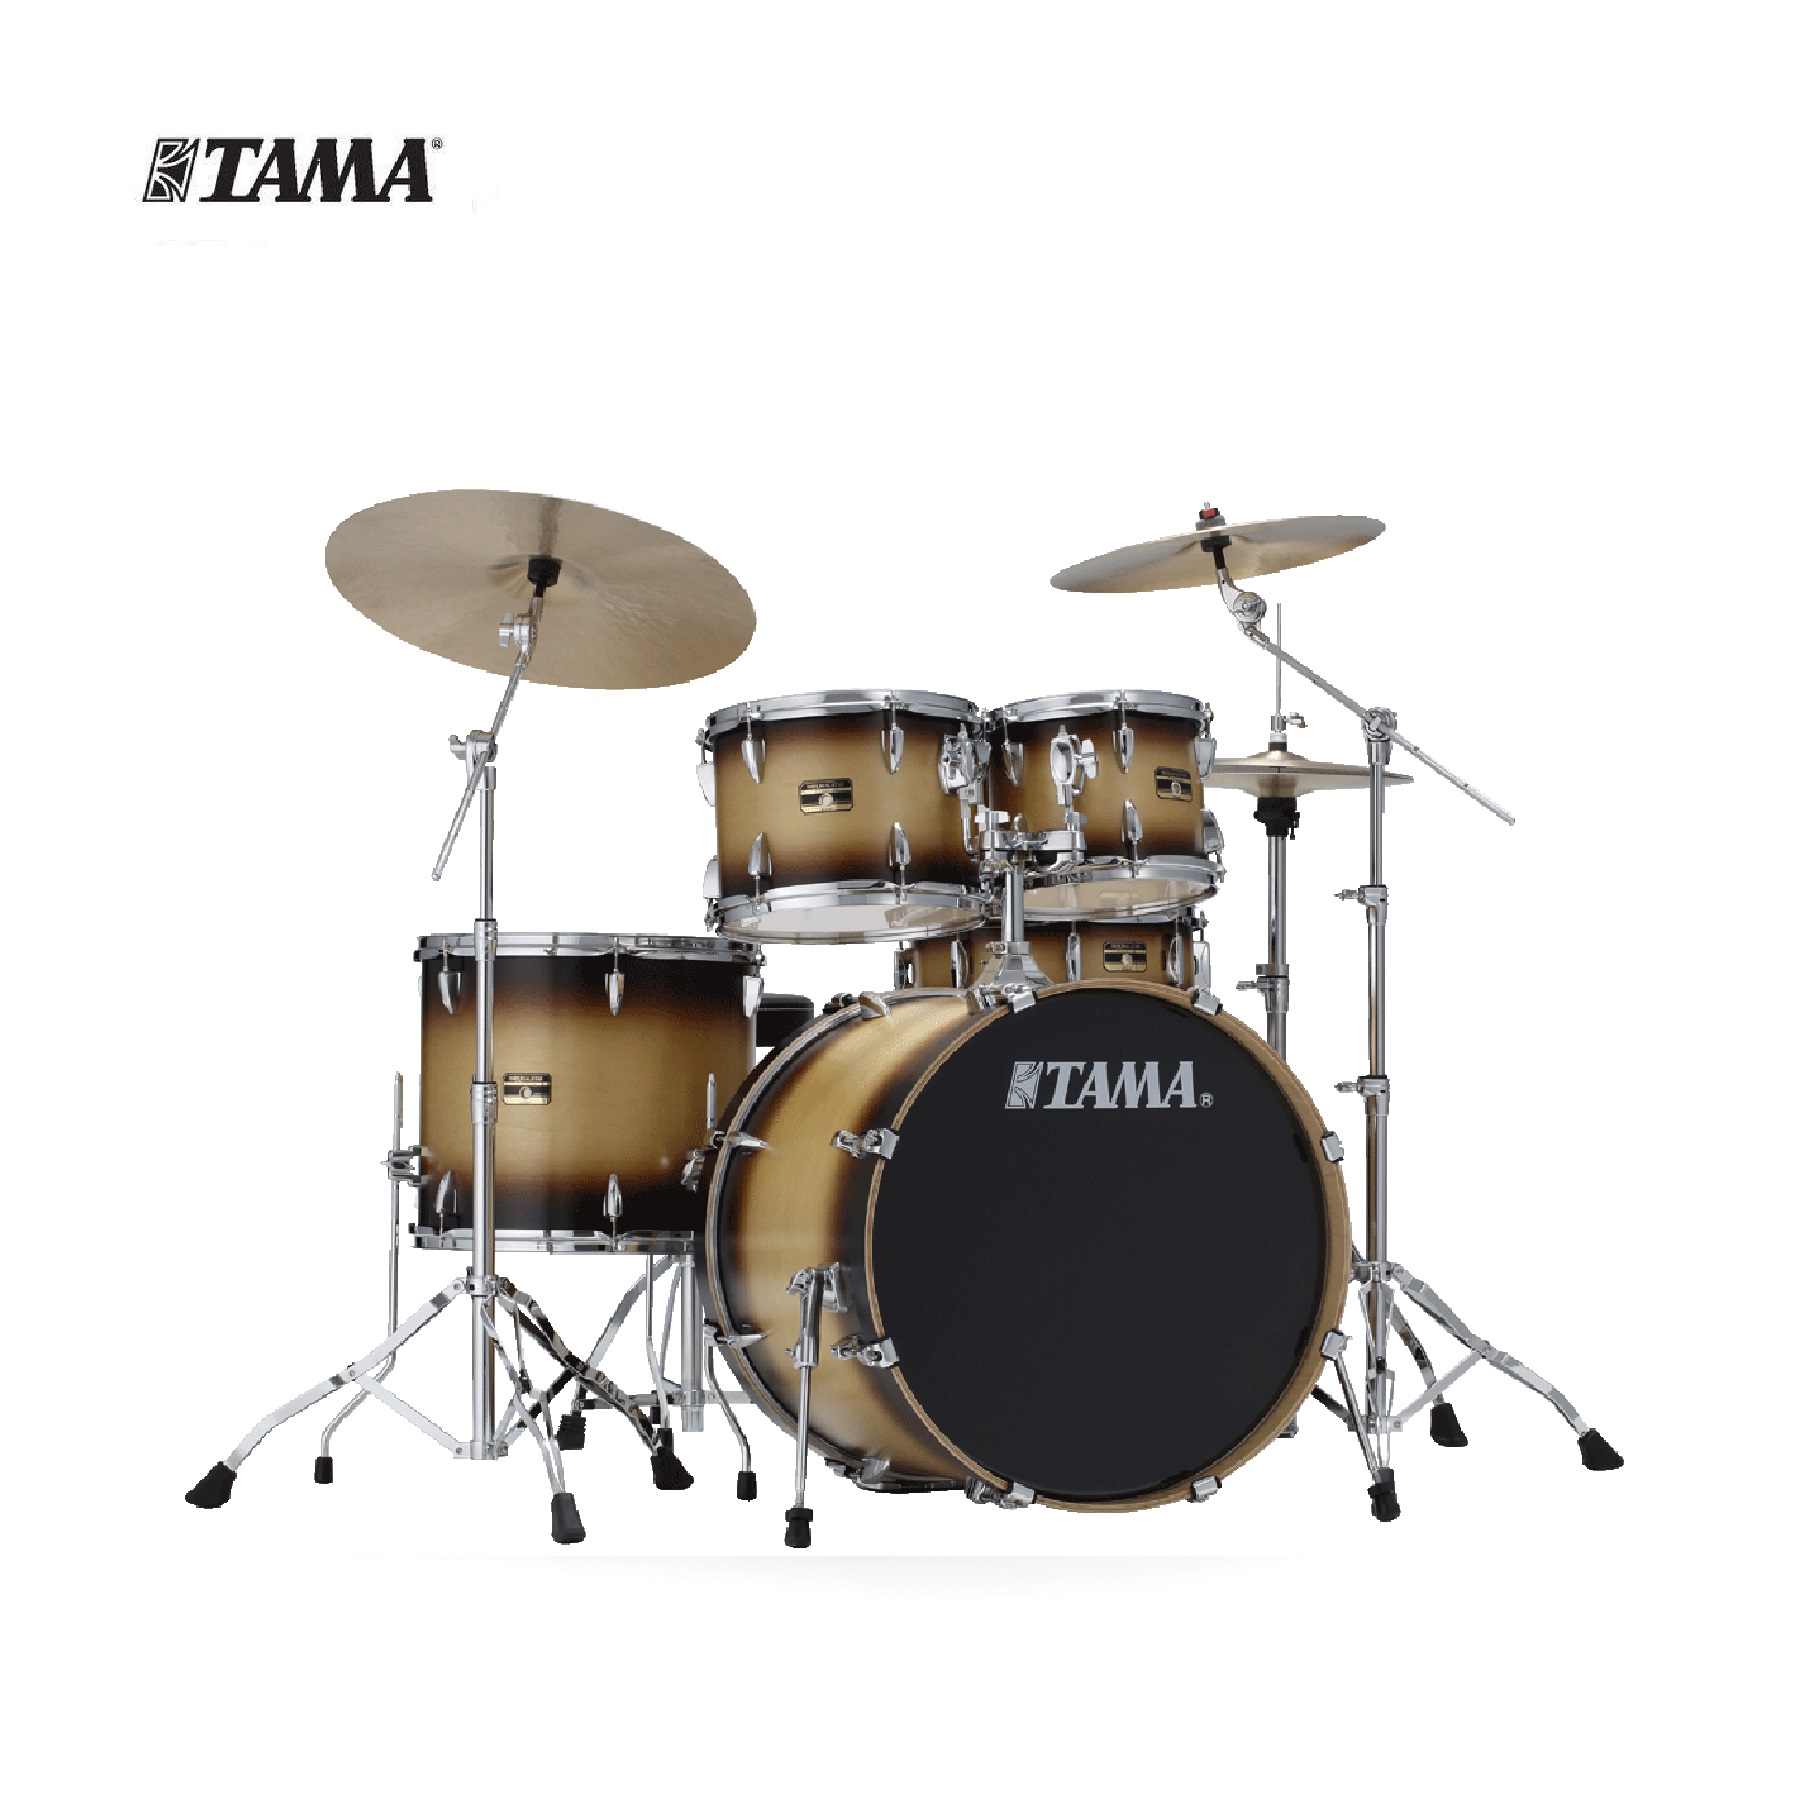 TAMA- Imperialstar Custom Drum Kits